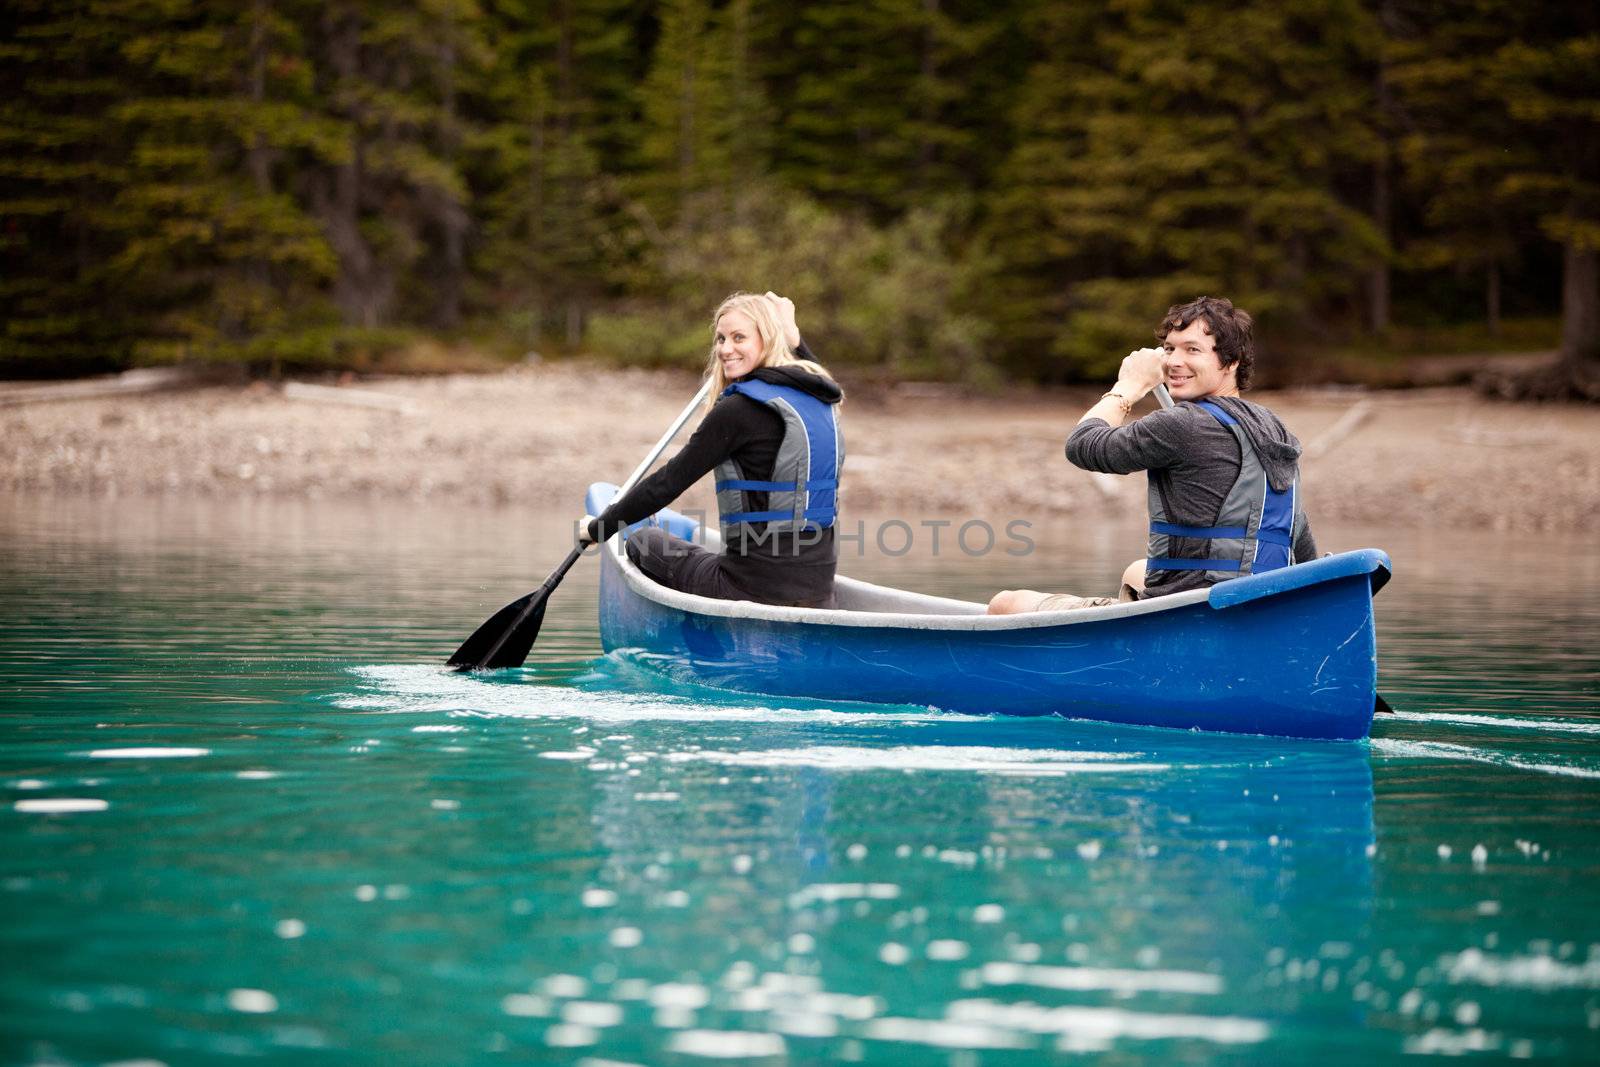 Canoe Adventure in Lake by leaf